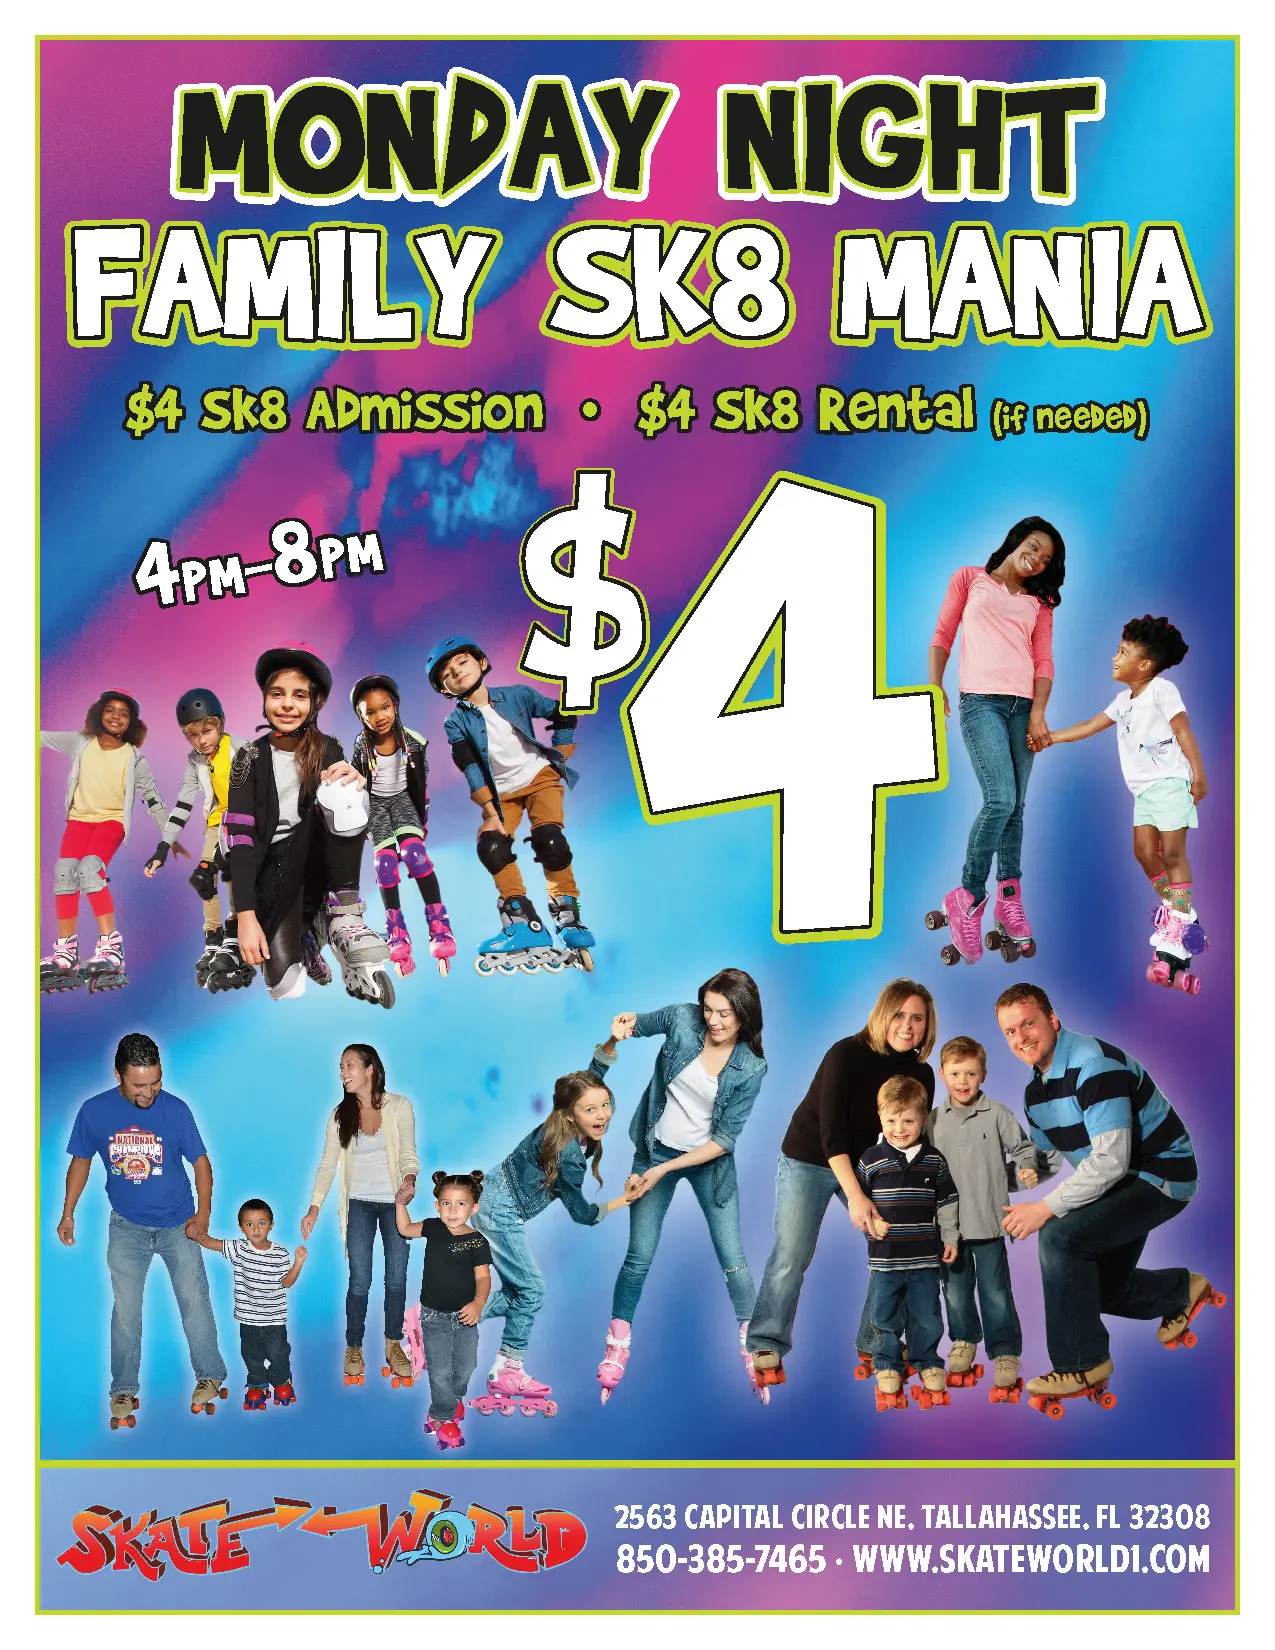 Monday Night Family Skate Mania